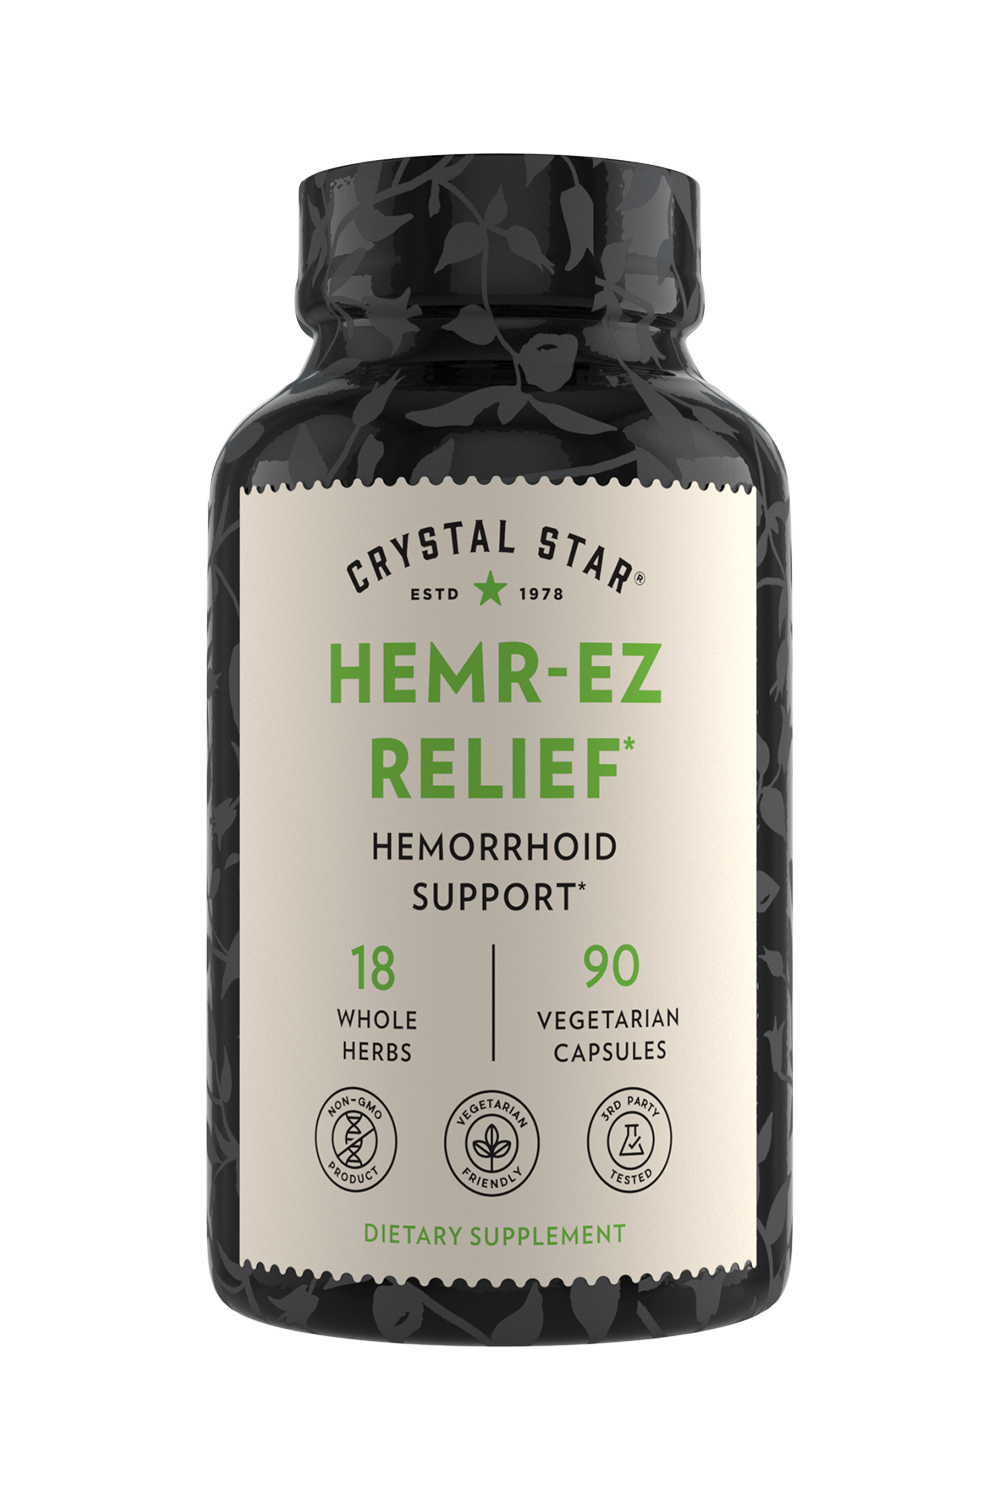 Crystal Star Hemr-EZ Relief supplement for hemorrhoid support, Front Side